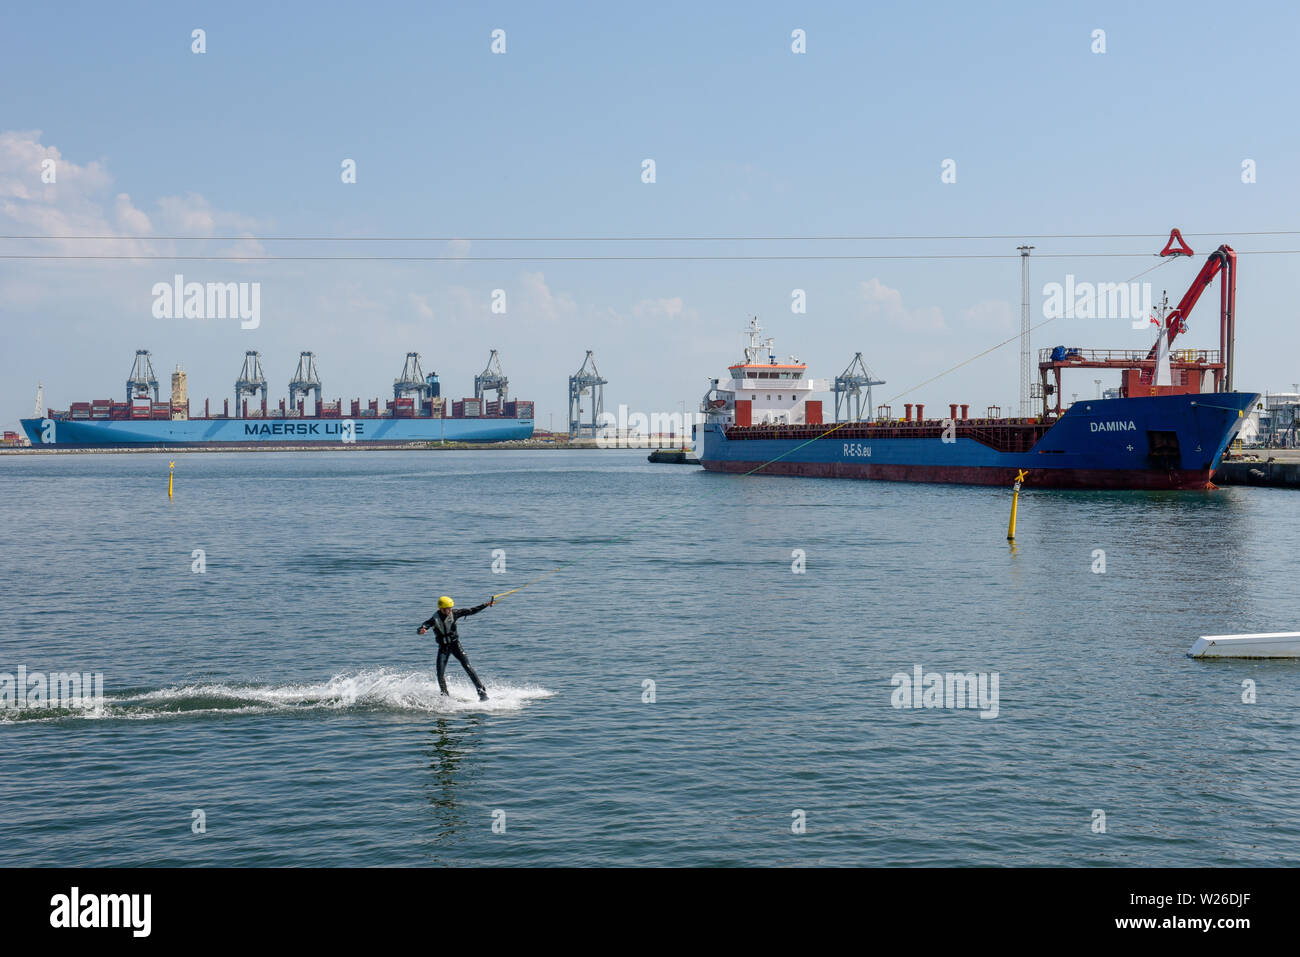 Aarhus, Denmark - 19 June 2019: man wakeboarding on the port of Aarhus in Denmark Stock Photo